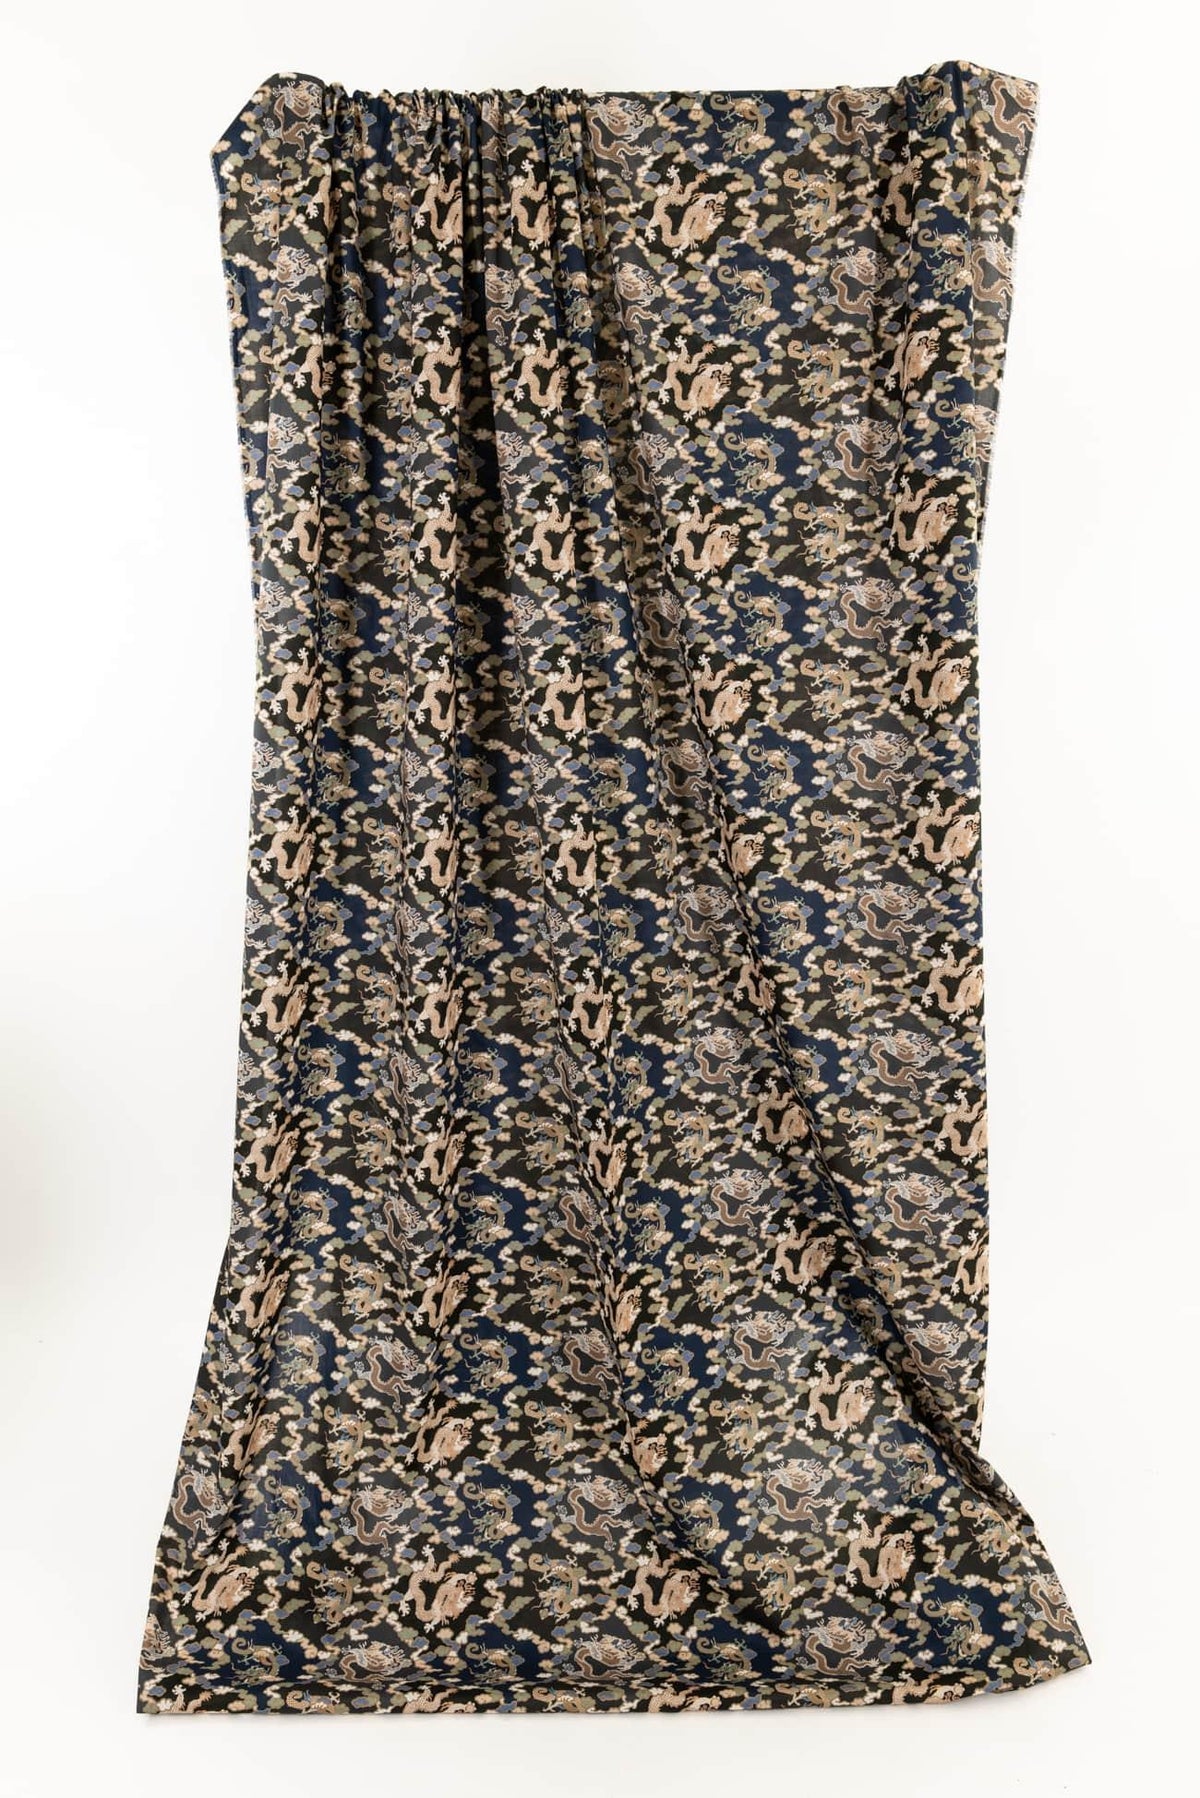 Dragon Blue Liberty Cotton Woven - Marcy Tilton Fabrics